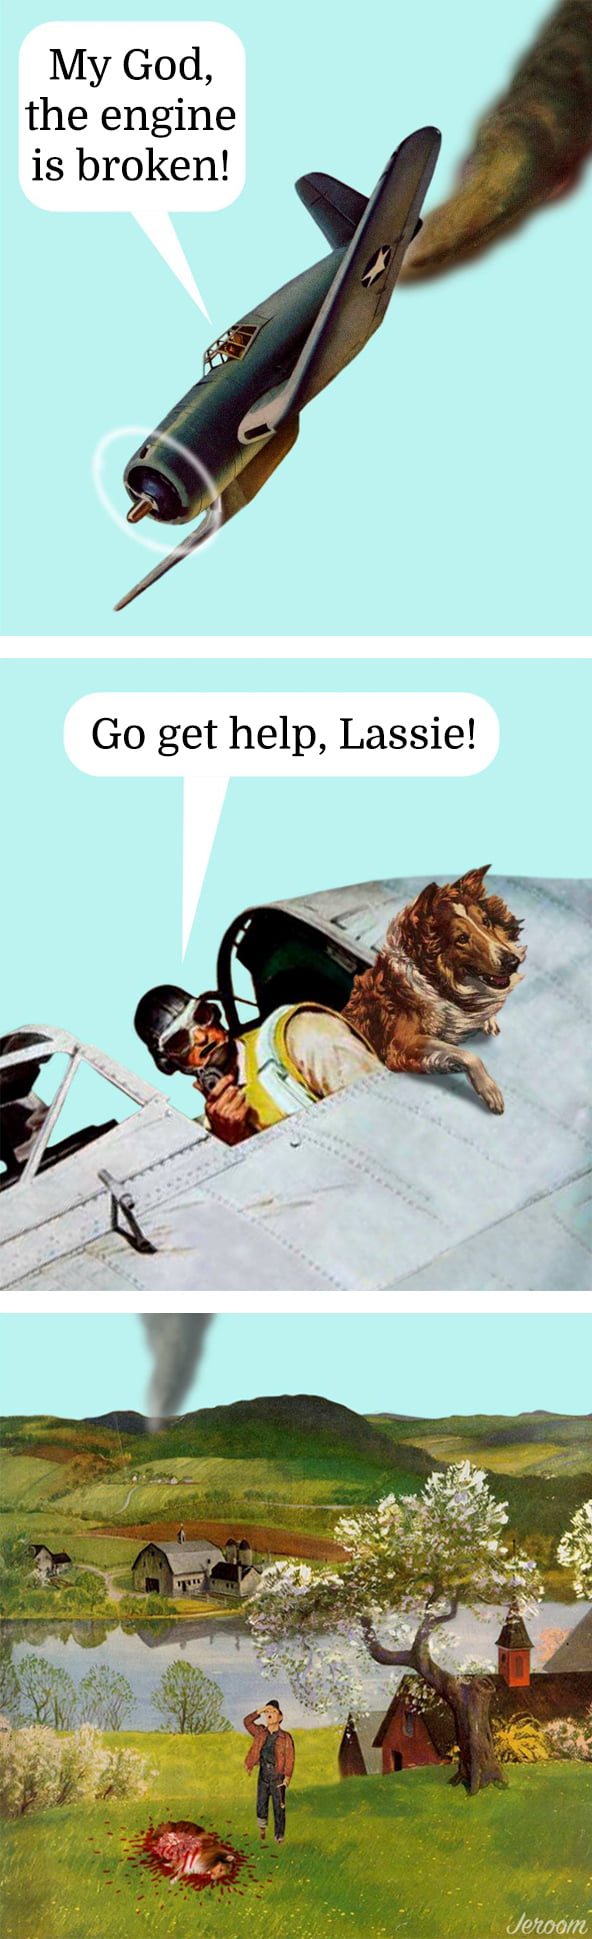 Lassies Last Lost Episode 9gag 